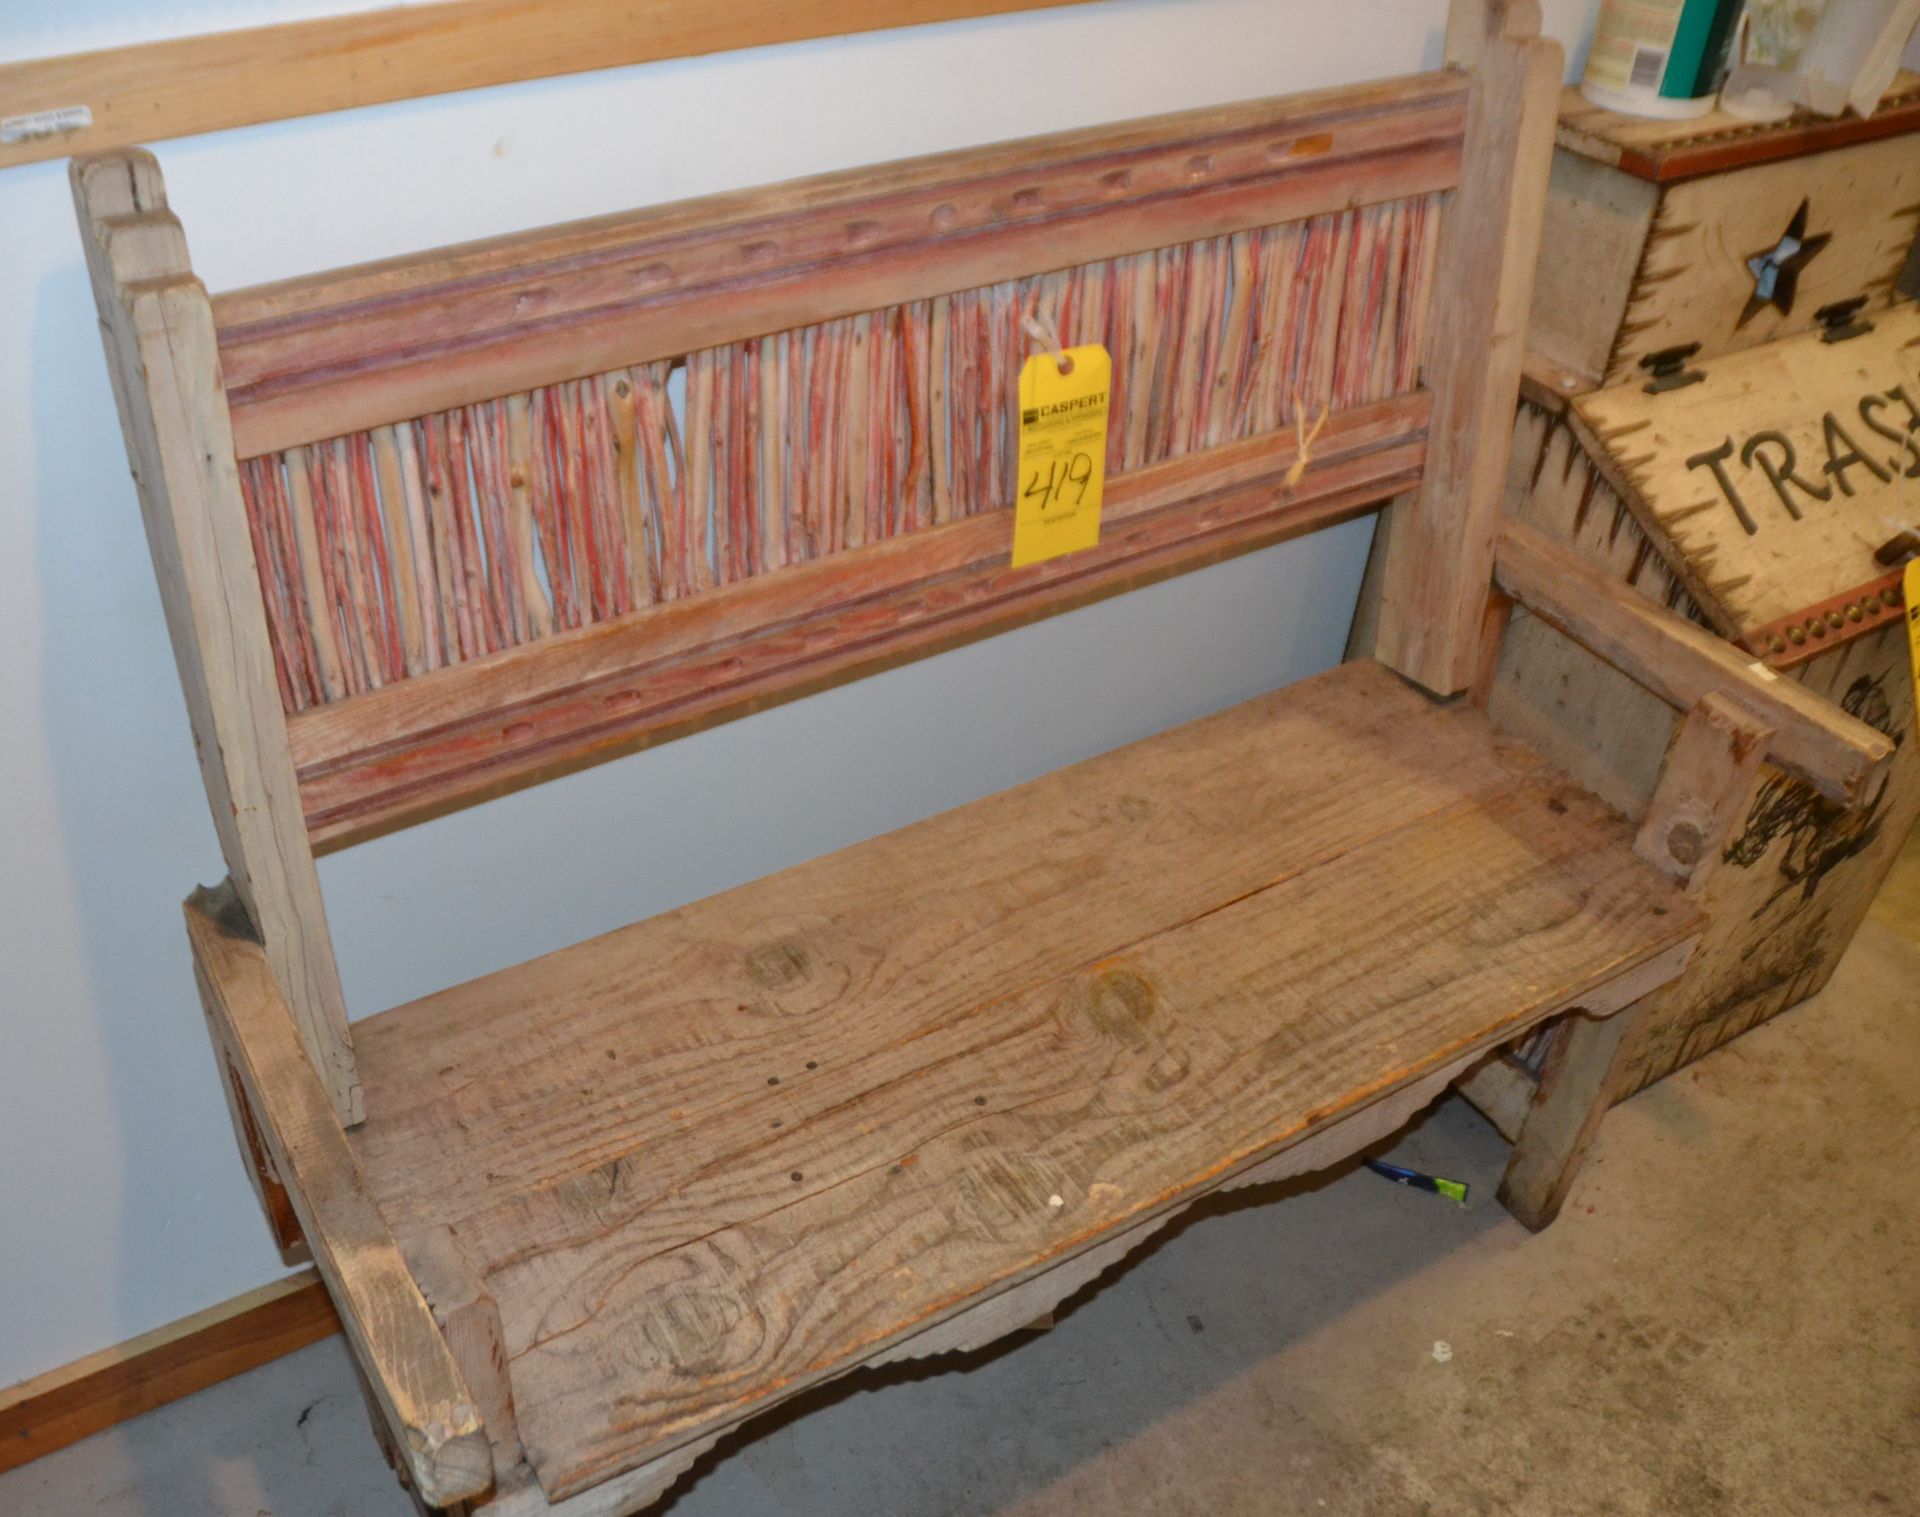 5' Wooden Bench